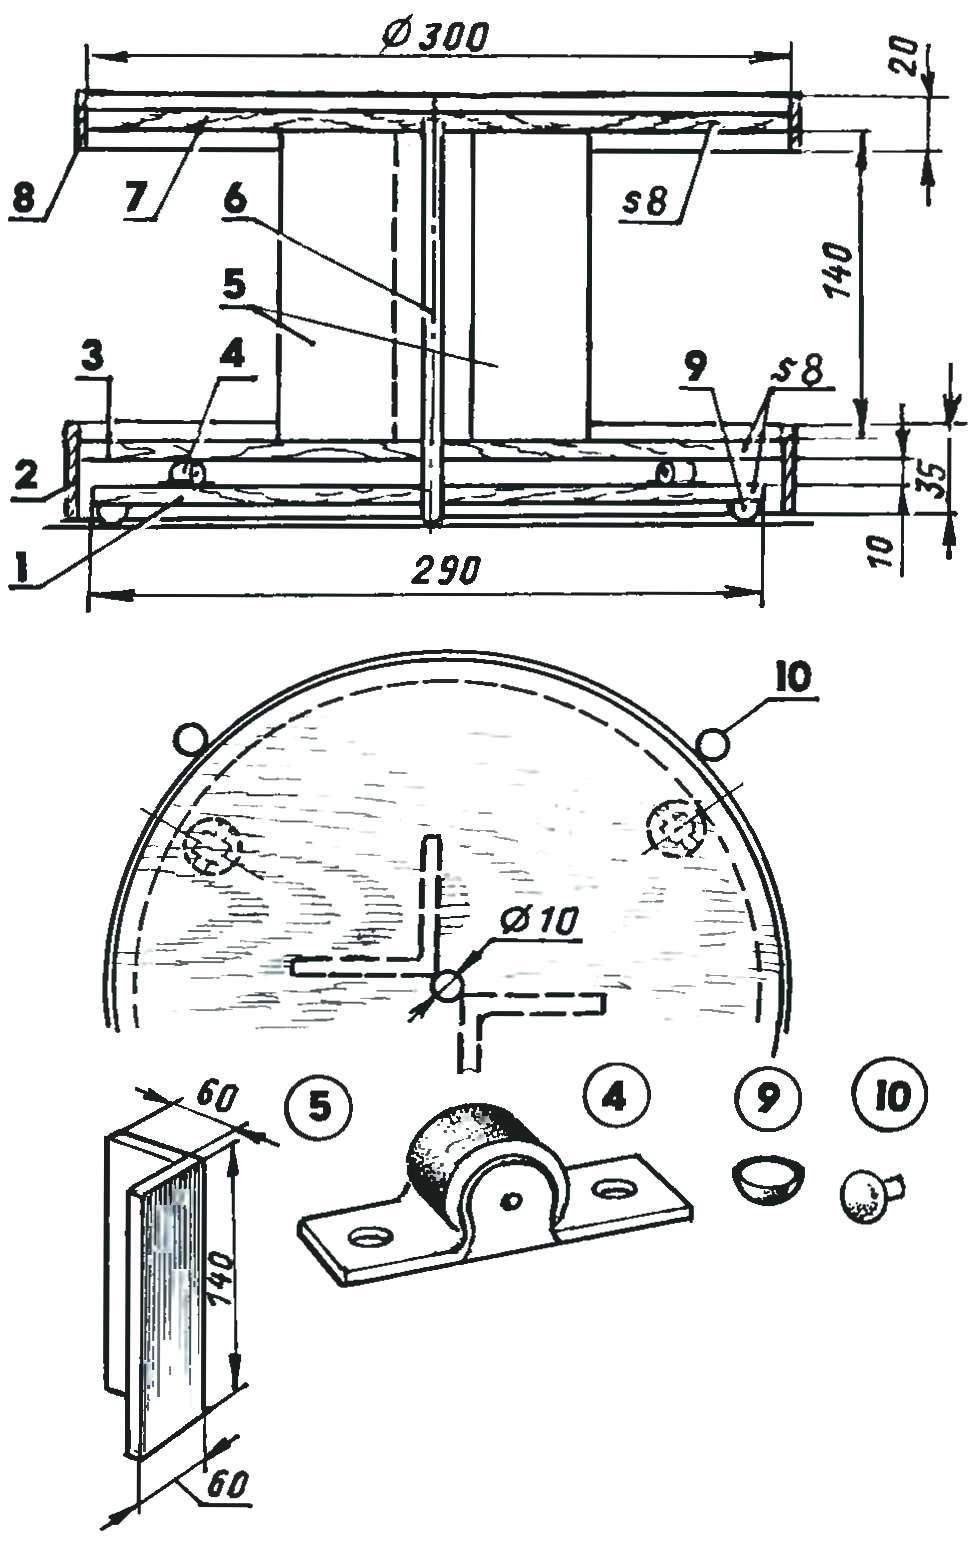 Fig. 1. Rotating table shelf